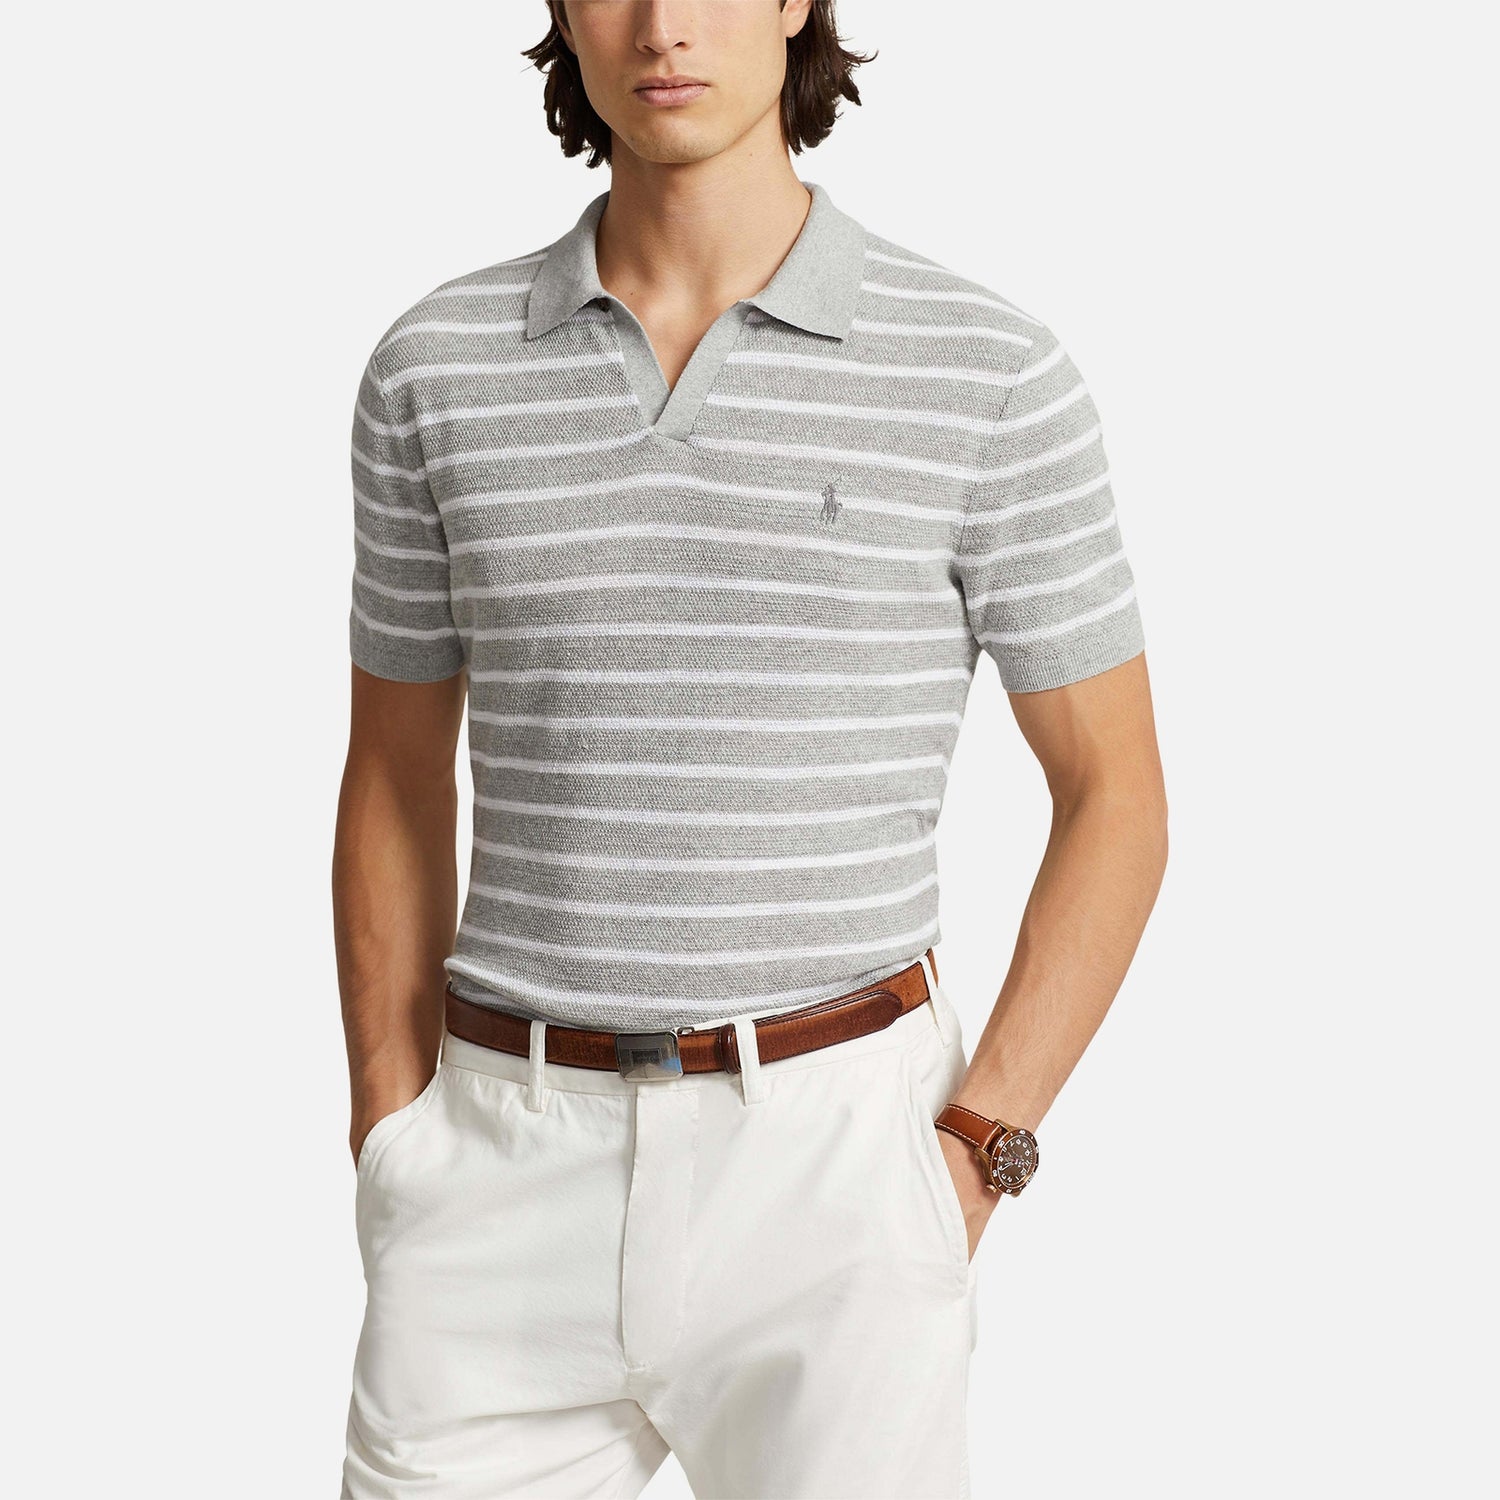 Polo Ralph Lauren Striped Knit Polo Shirt - XL